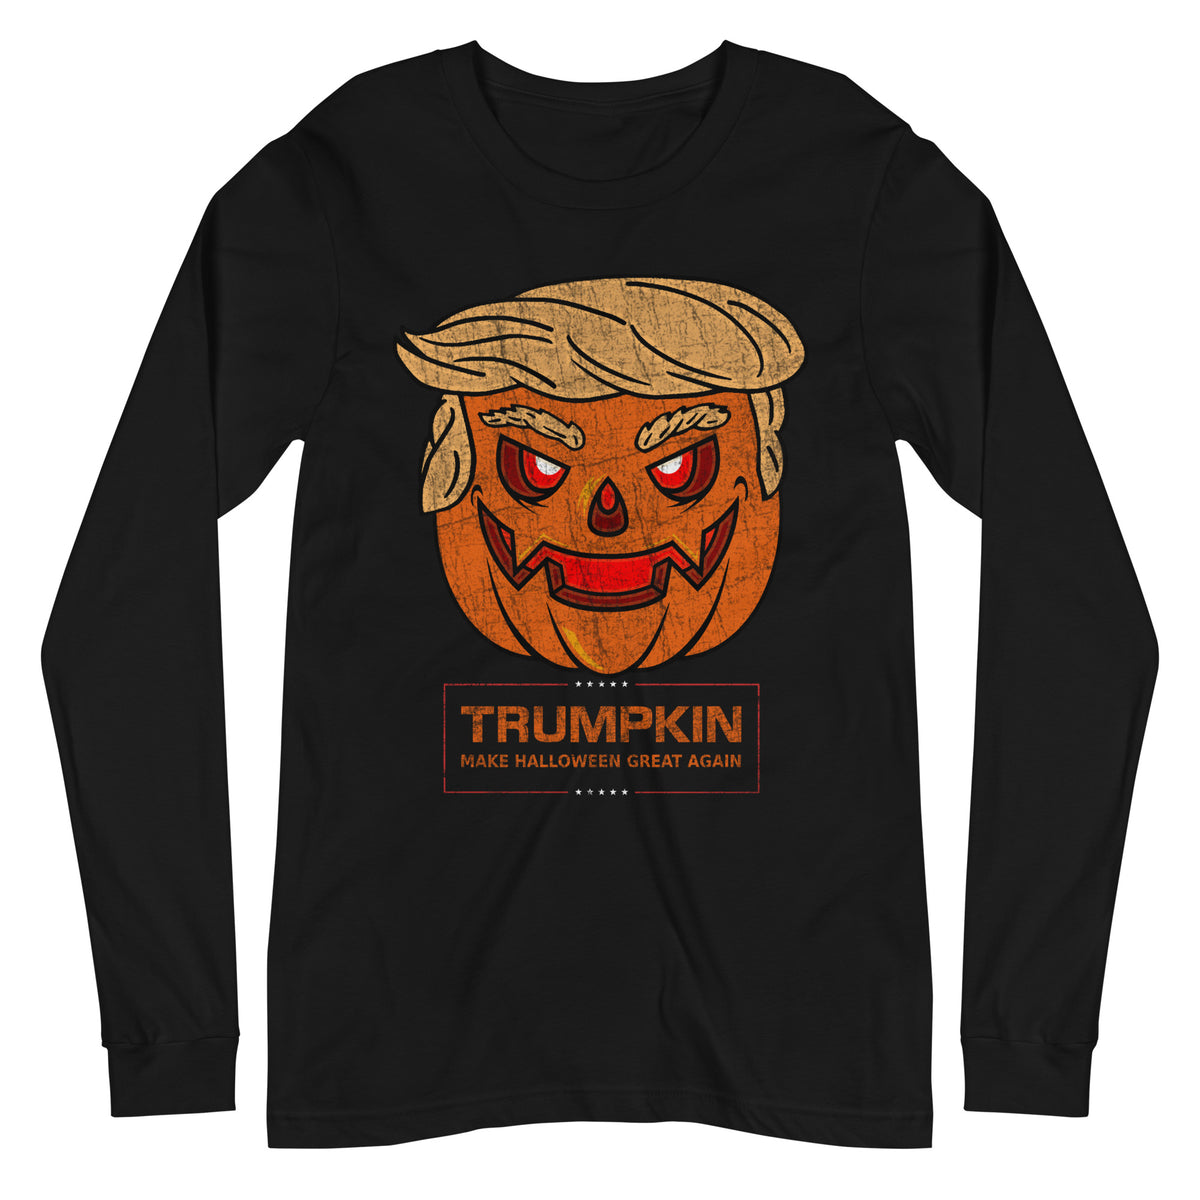 TRUMPKIN: Make Halloween Great Again! Long Sleeve